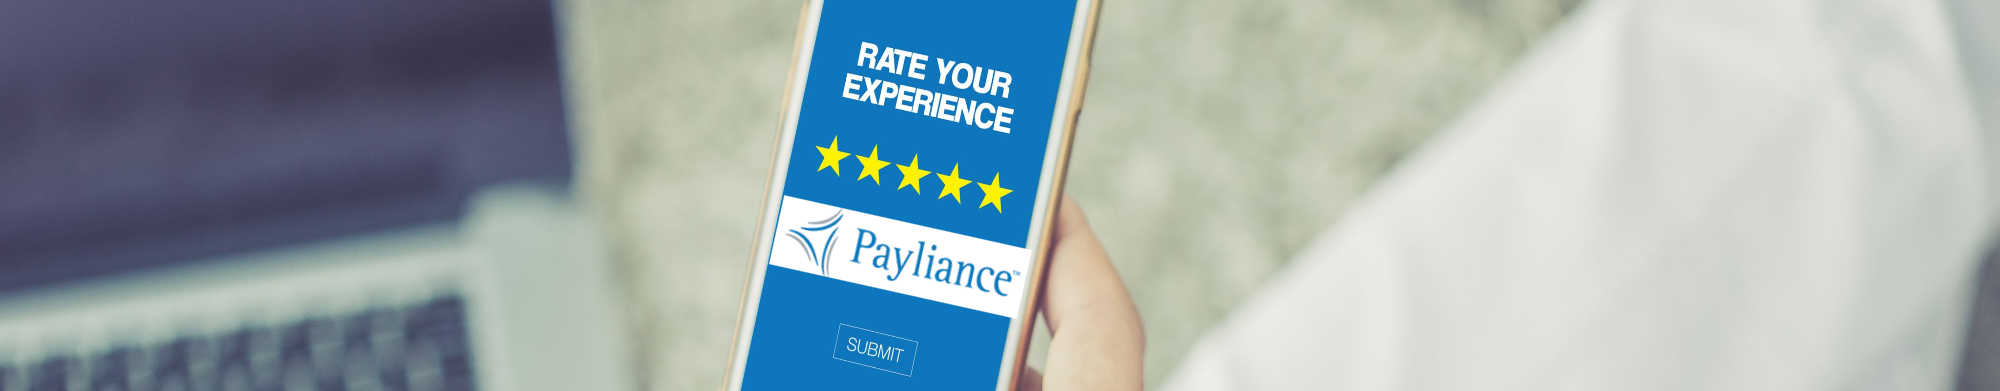 image of payliance customer reviews